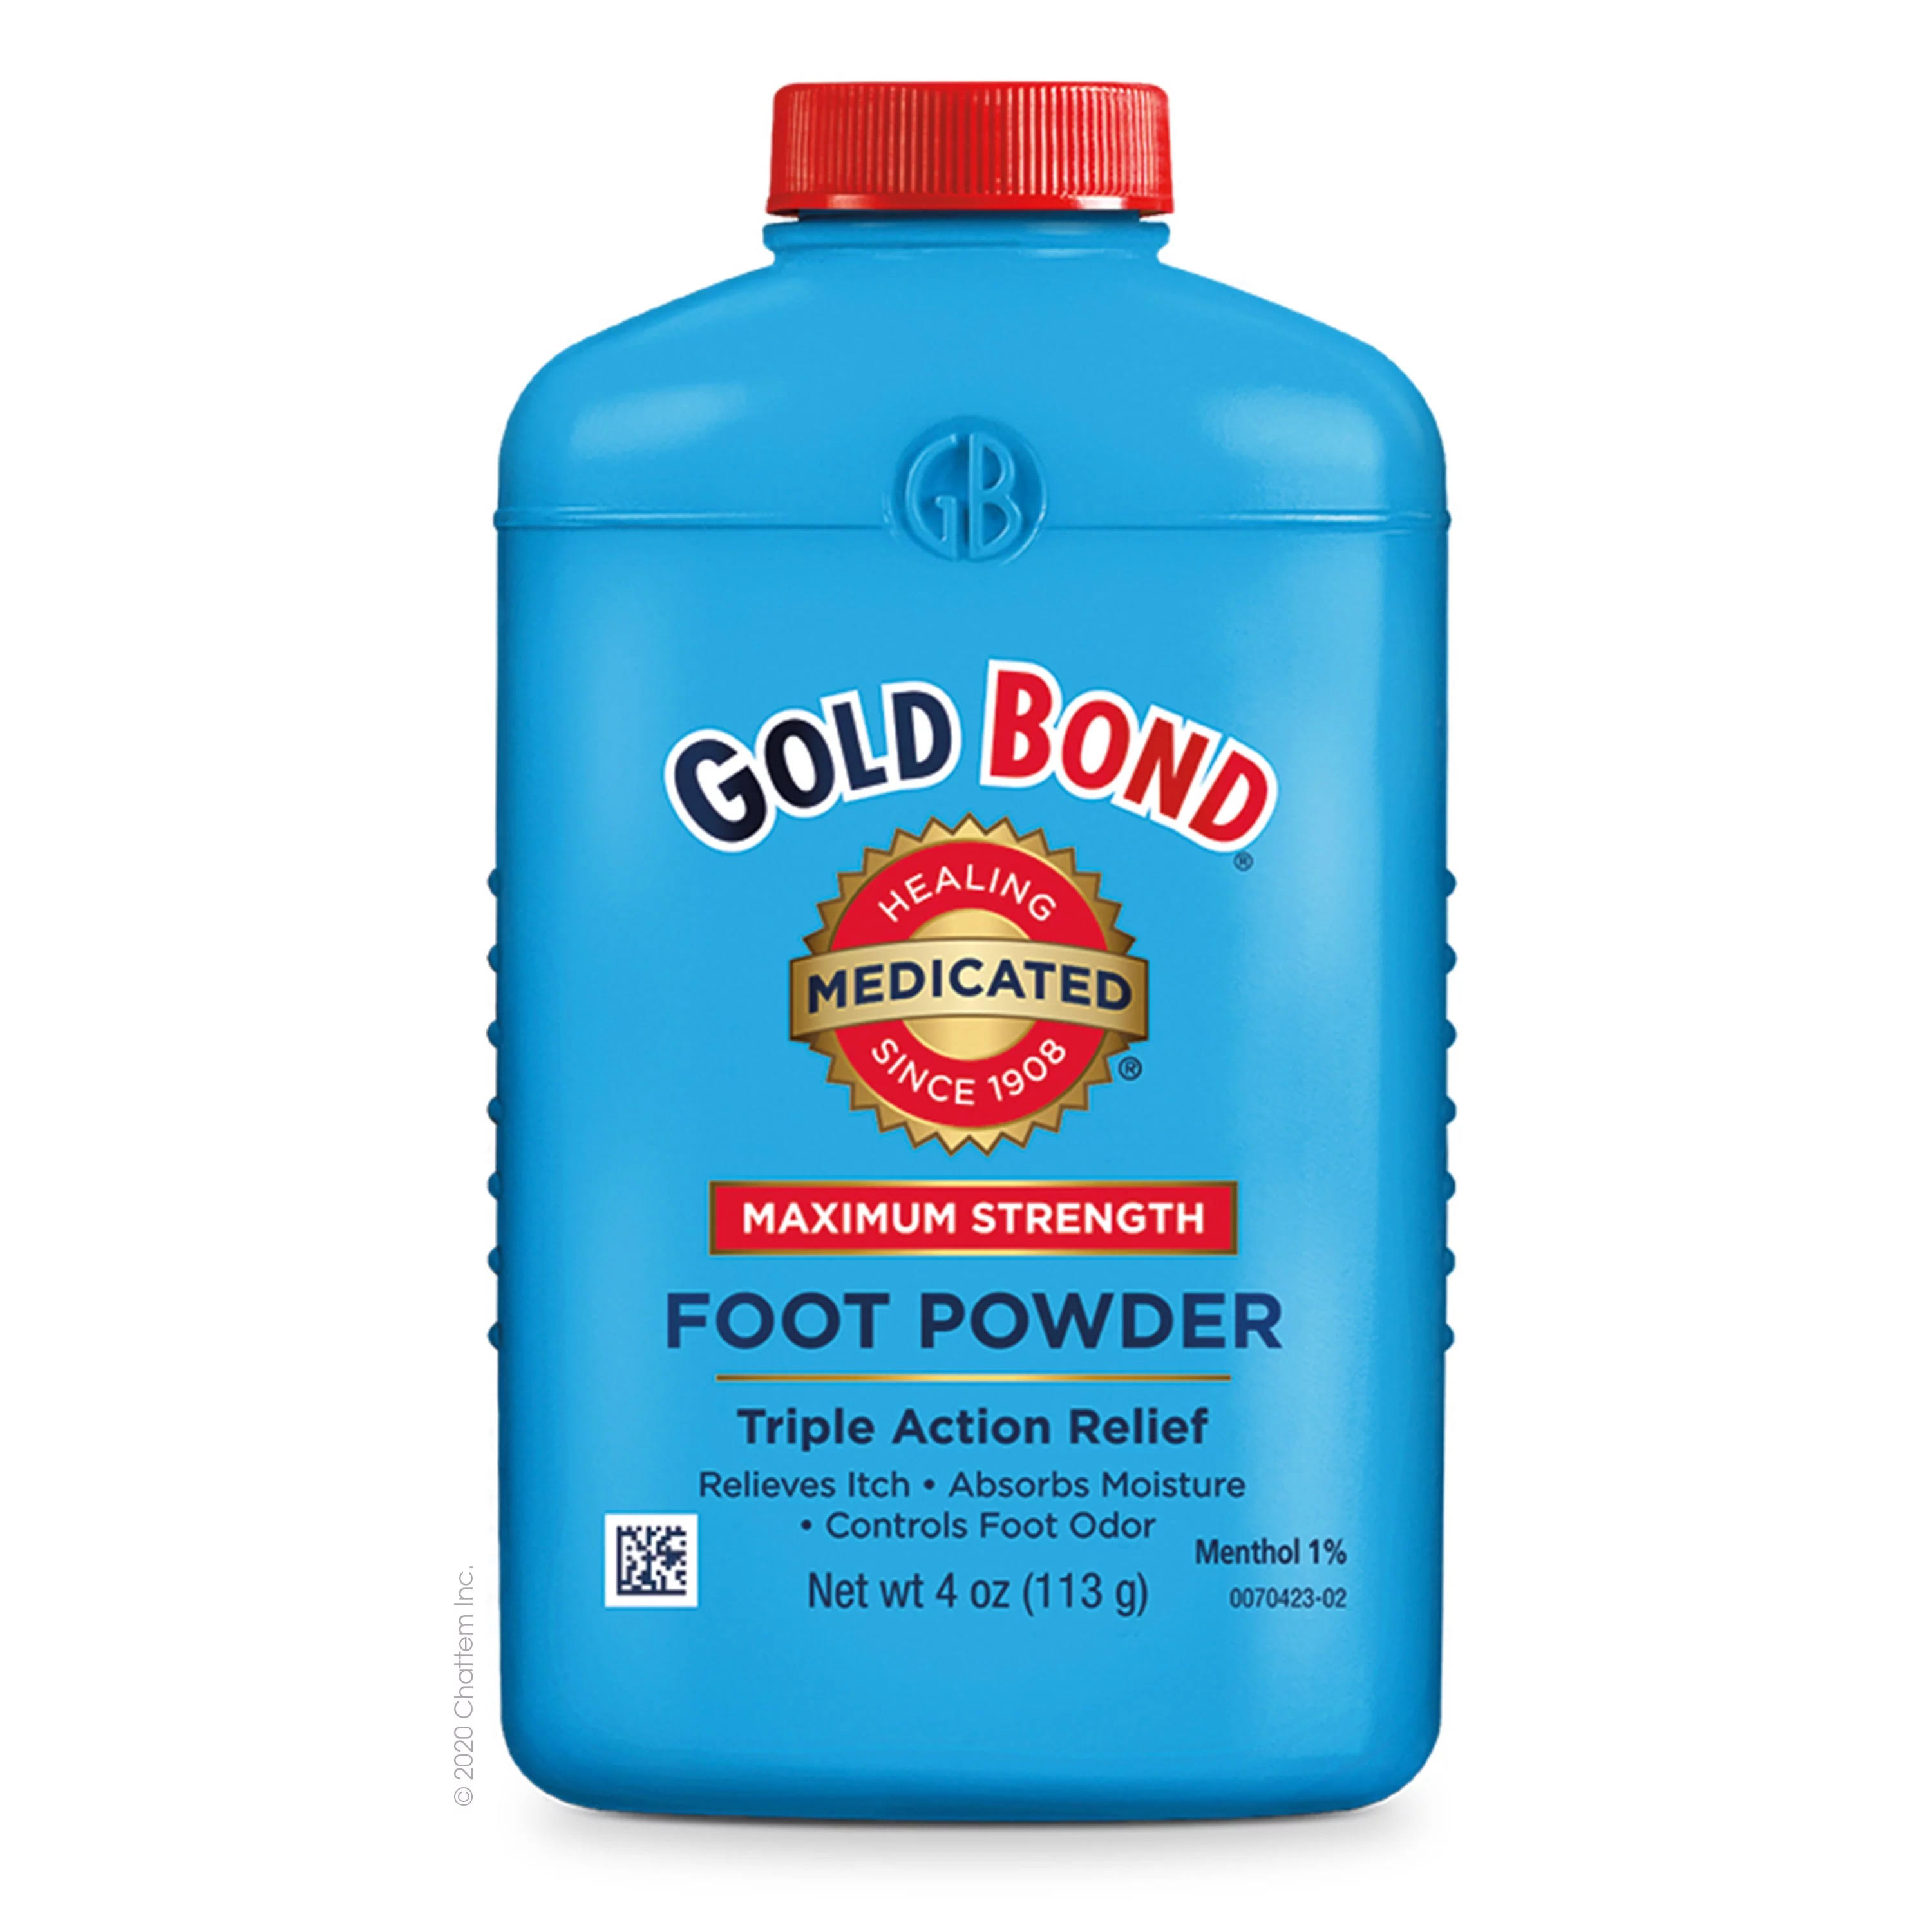 Gold Bond Medicated Maximum Strength Foot Powder - 4 oz